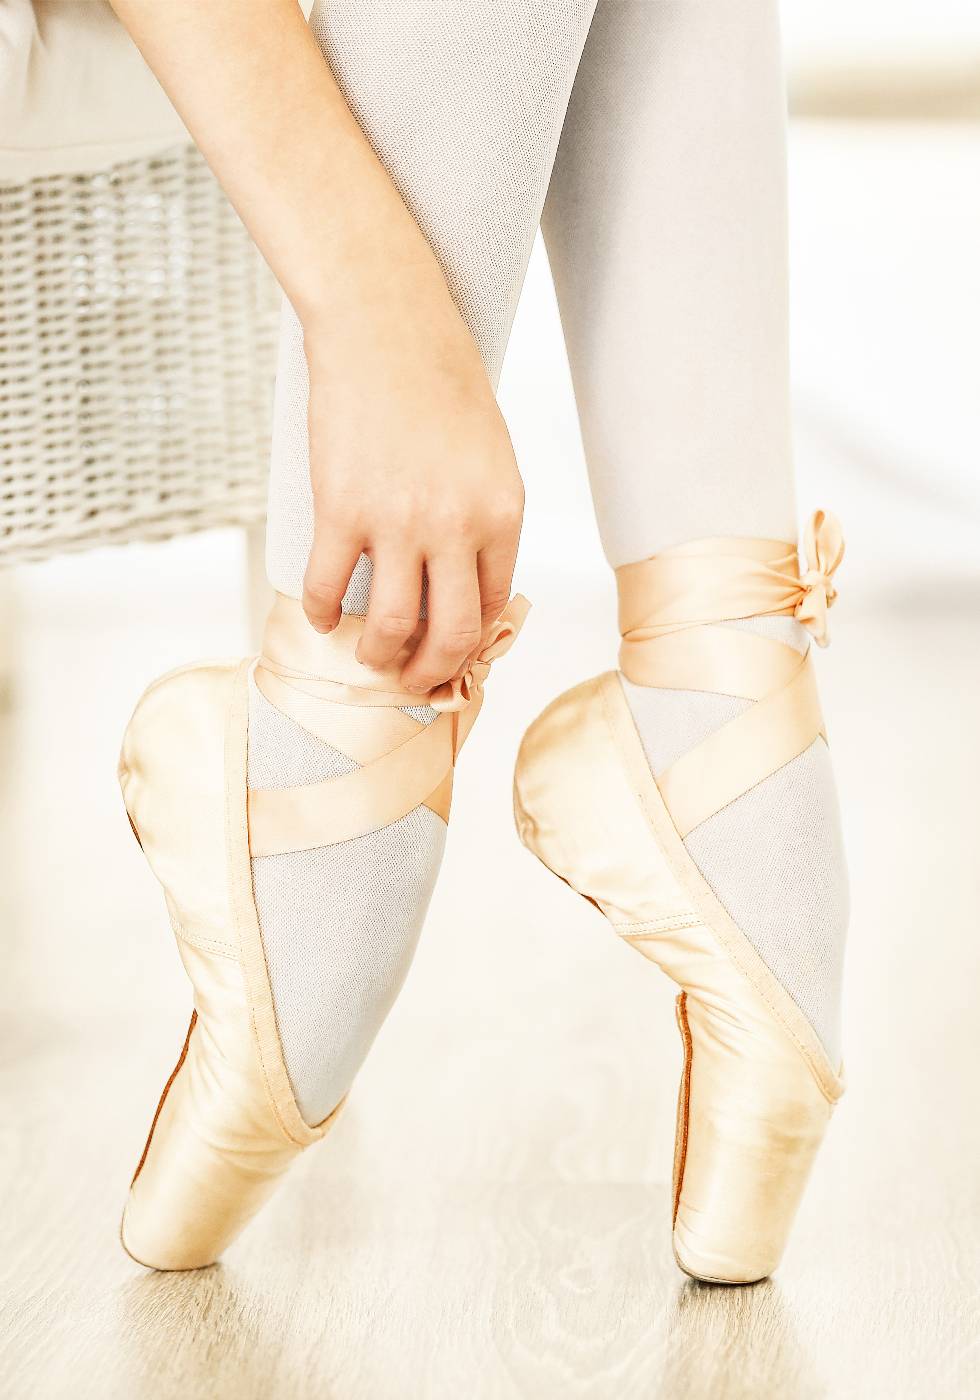 Ballerina Tying Ballet Shoes Poster